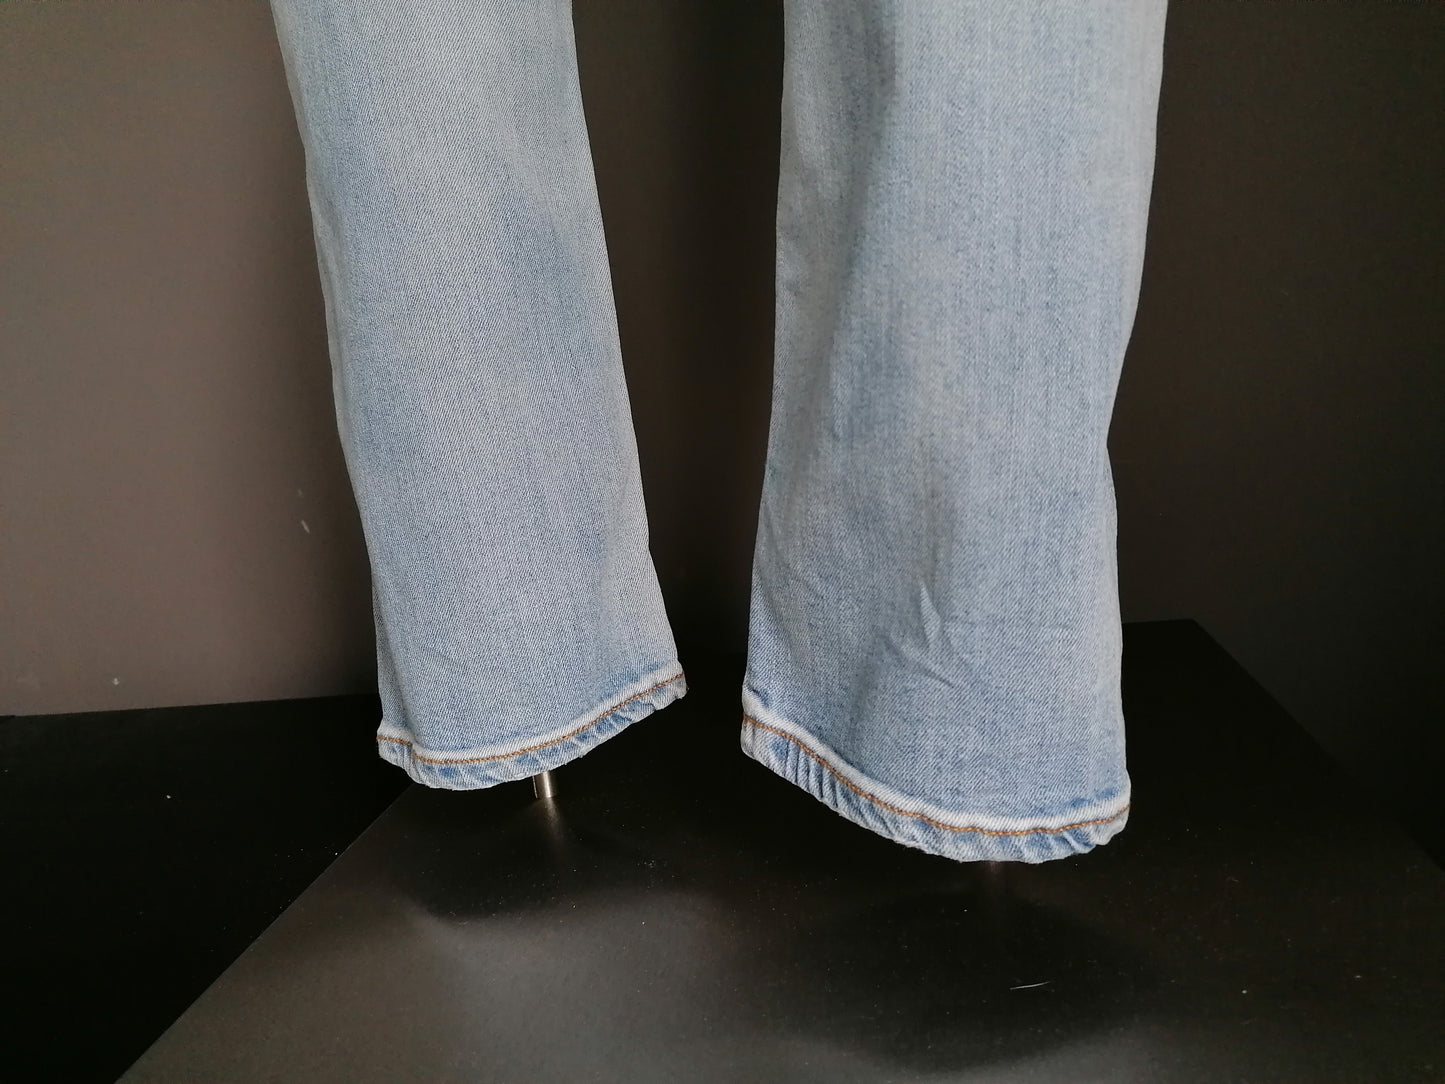 Reinado jeans. Azul claro coloreado. Tamaño W32 - L34. Estirar